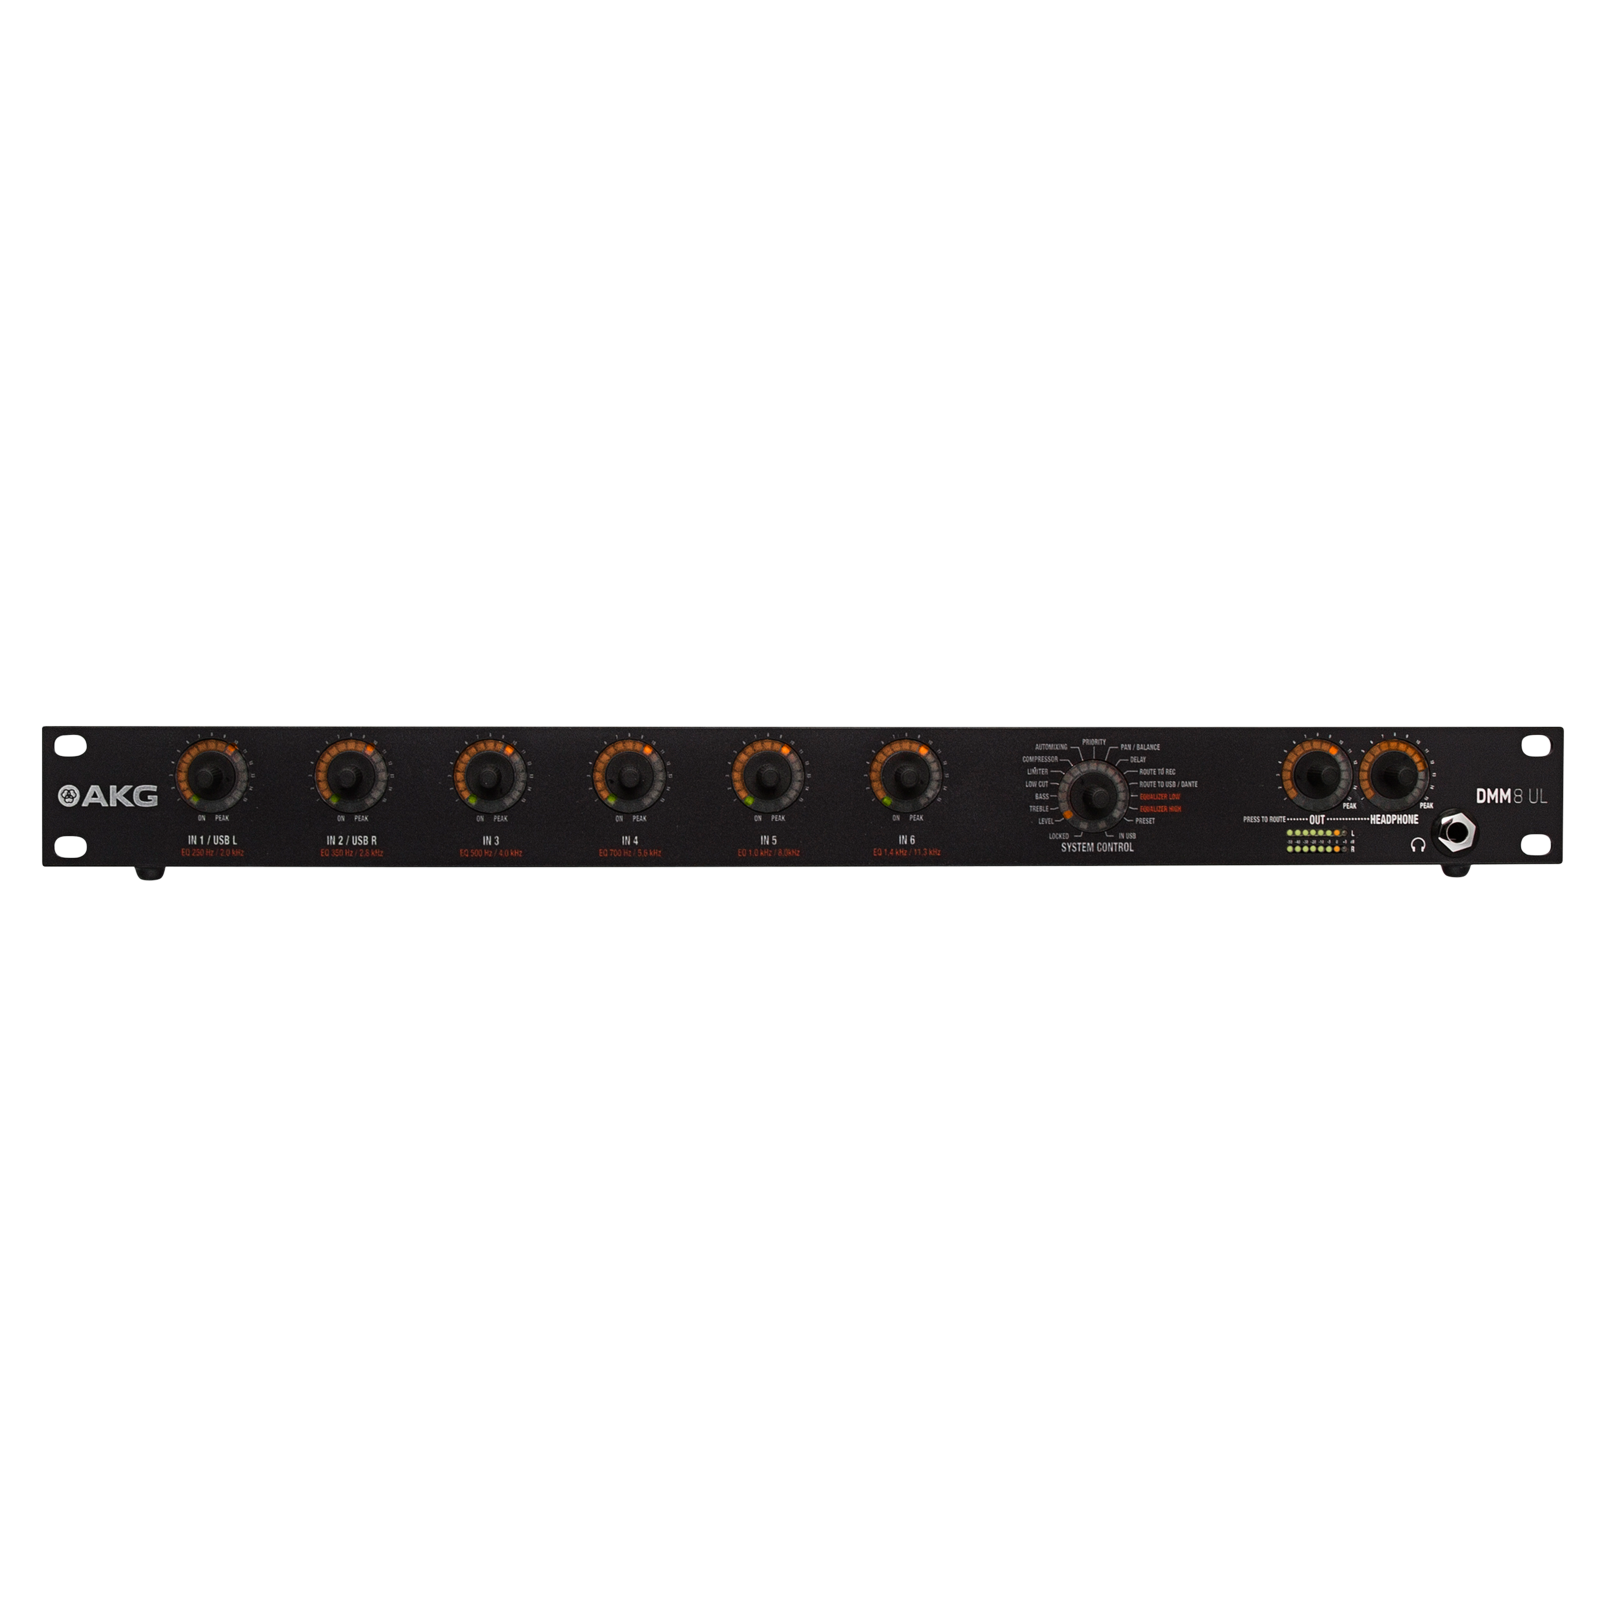 DMM8 UL - Black - Professional digital automatic microphone mixer w/LAN interface via Ethernet - Hero